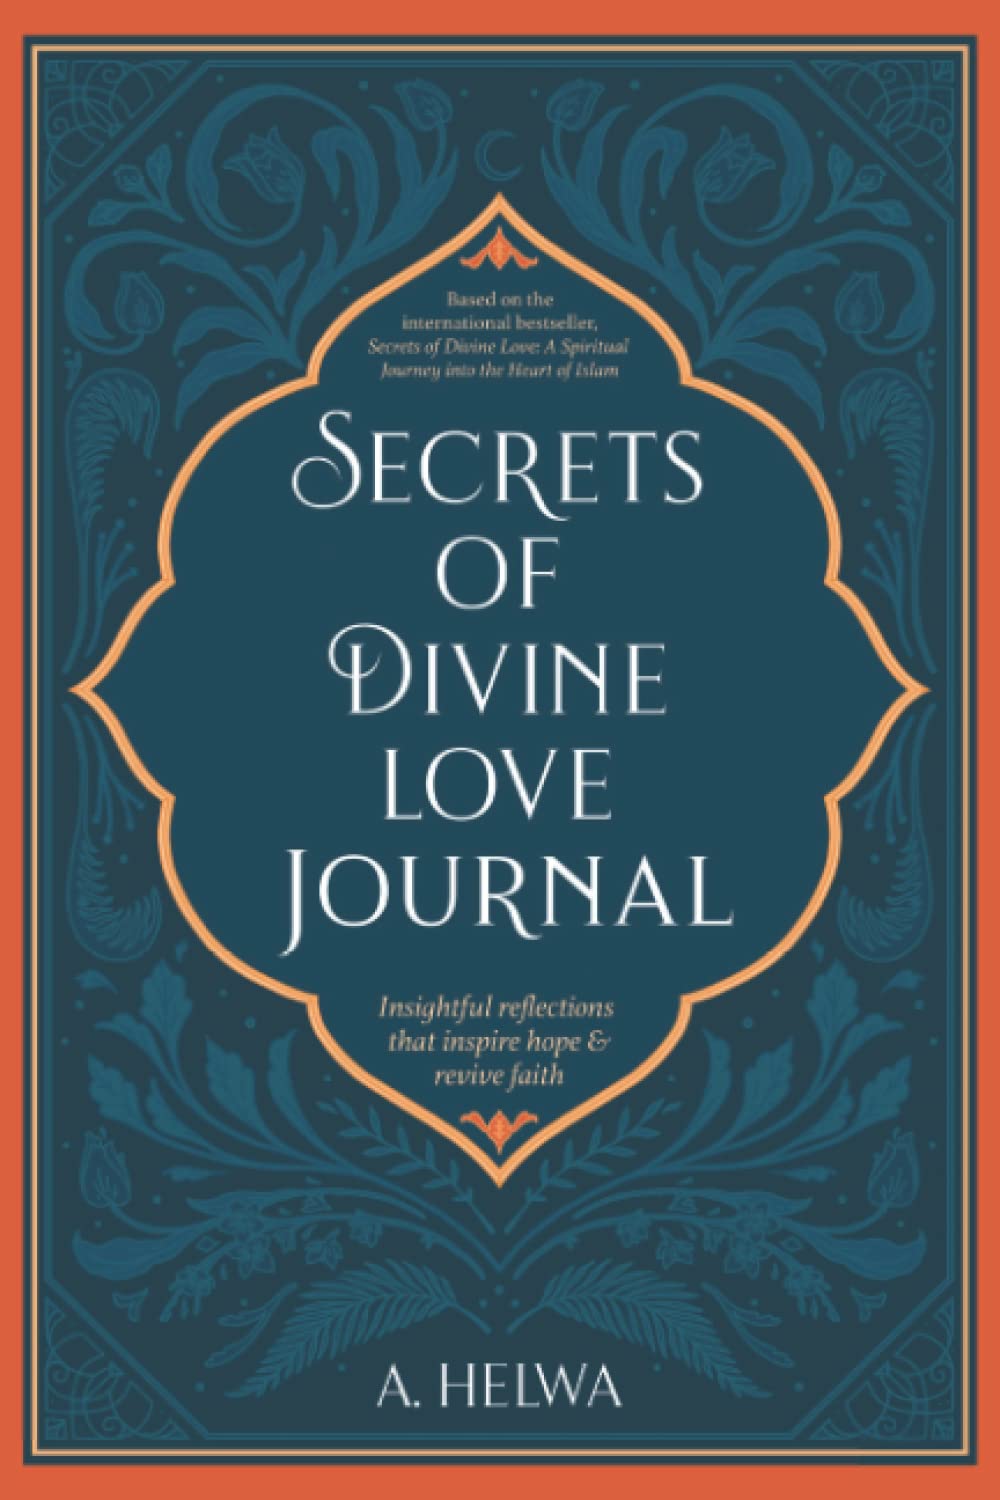 Secrets of Divine Love and Secret of Divine Journal by A.Helwa (Original) (2 Books Set)